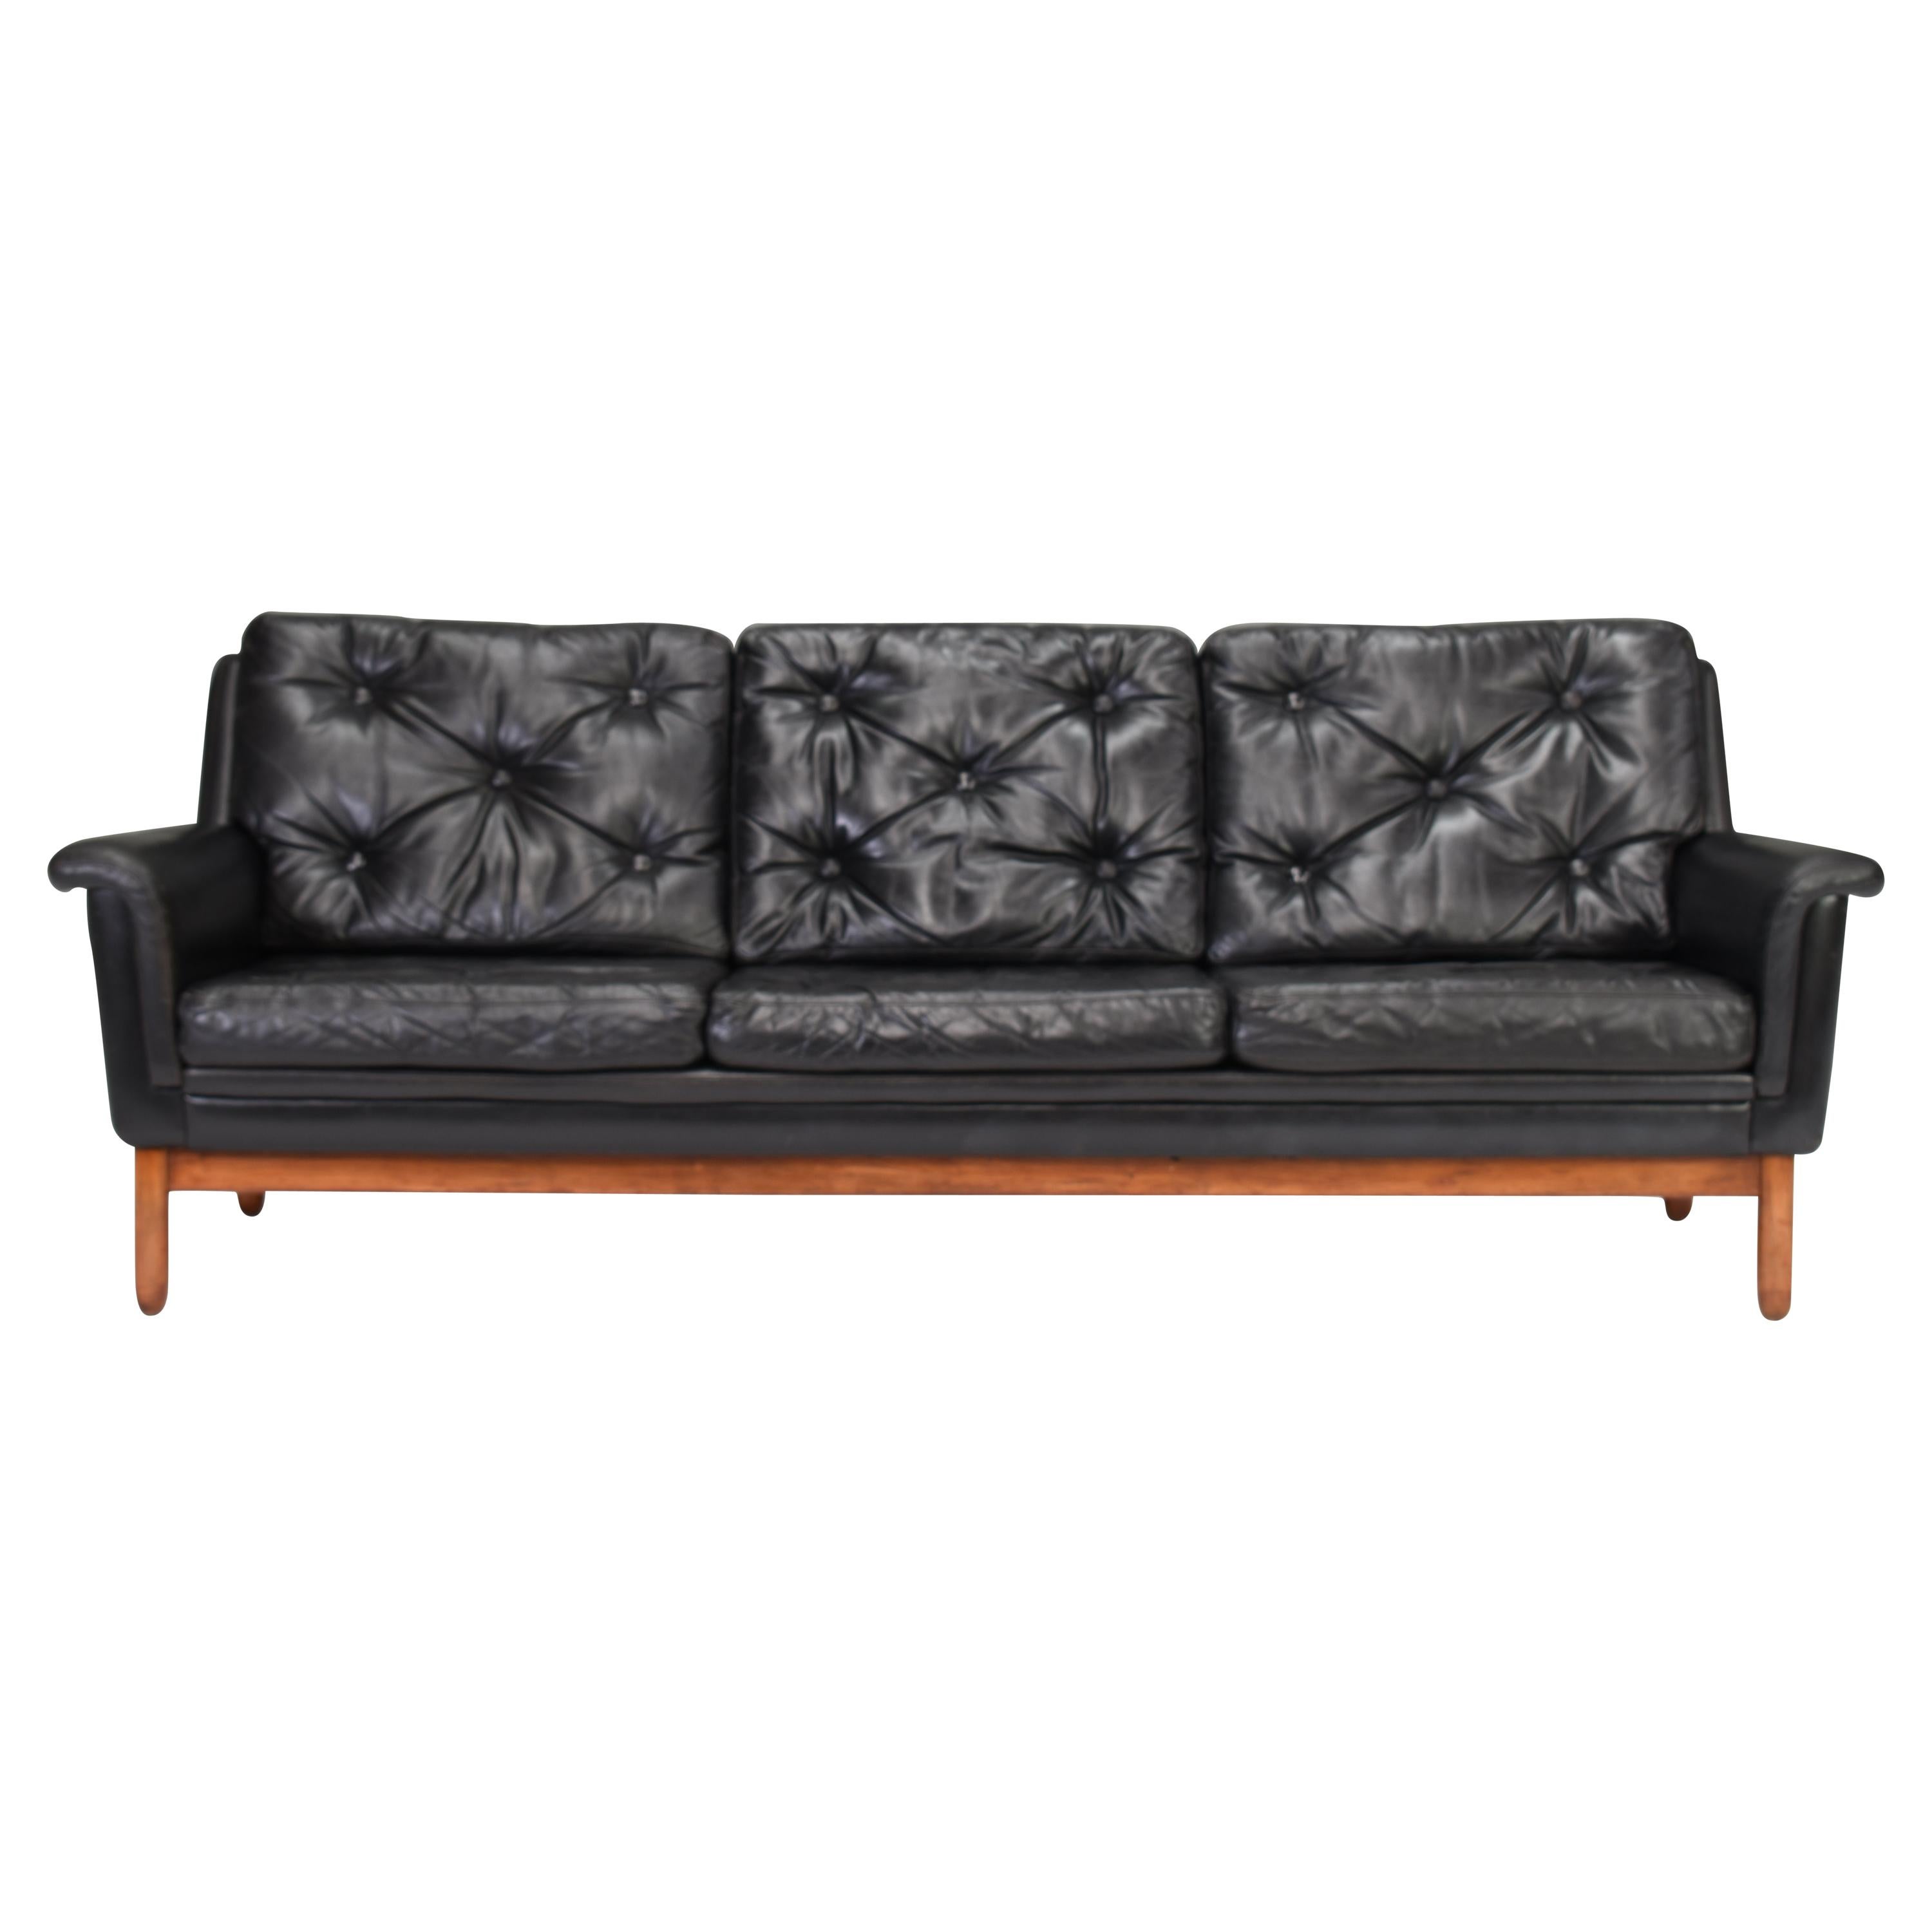 Danish Black Leather Three-Seat Sofa, Denmark, 1950s-1960s